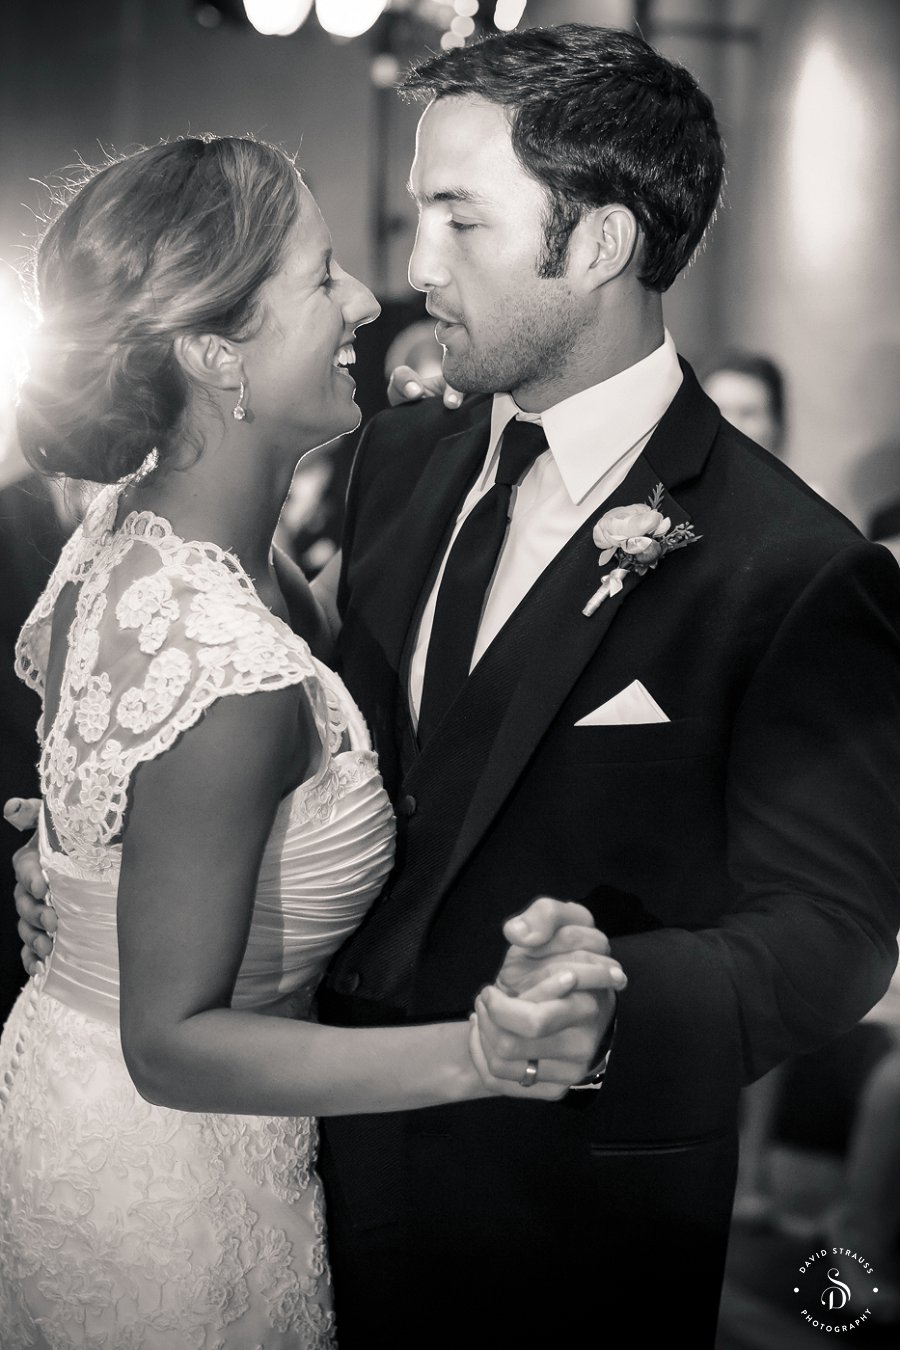 Atlanta Wedding Photography - Charleston Photographer David Strauss - Claire and Kyle - 32